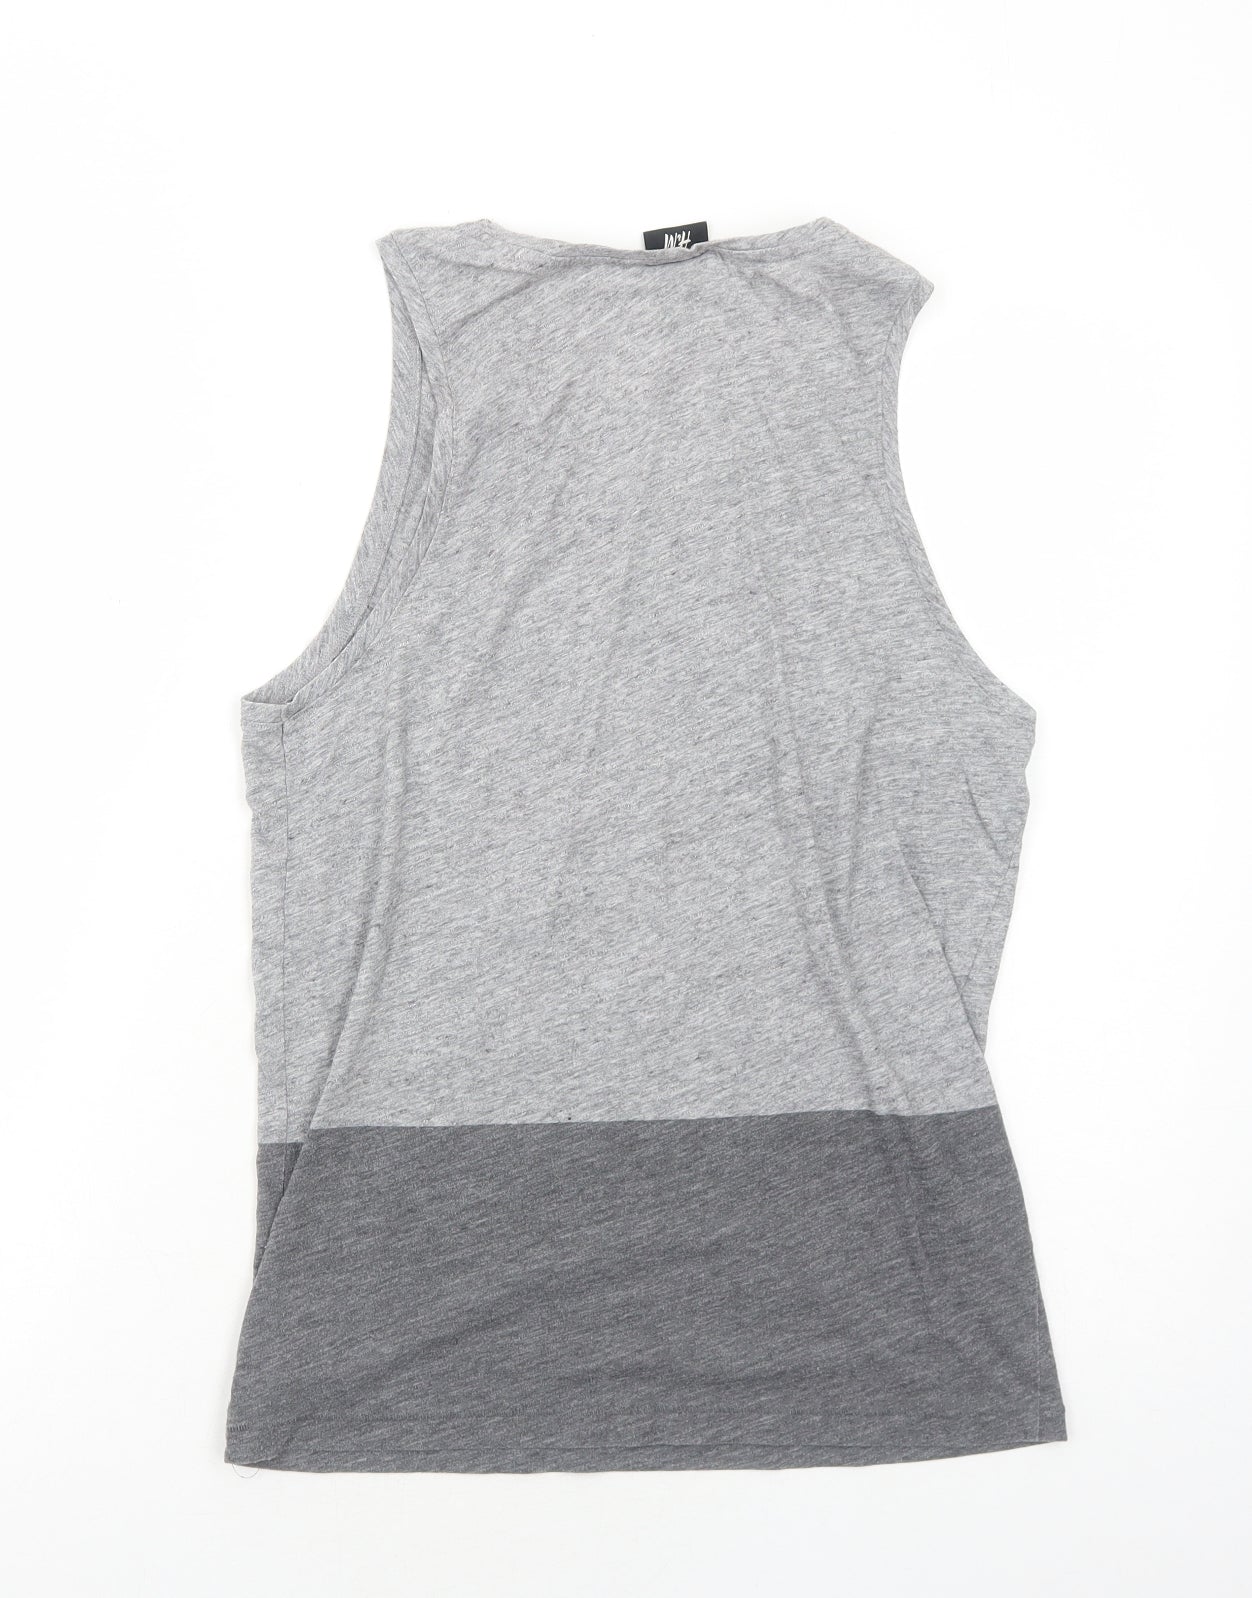 H&M Mens Grey Colourblock Cotton T-Shirt Size S Round Neck